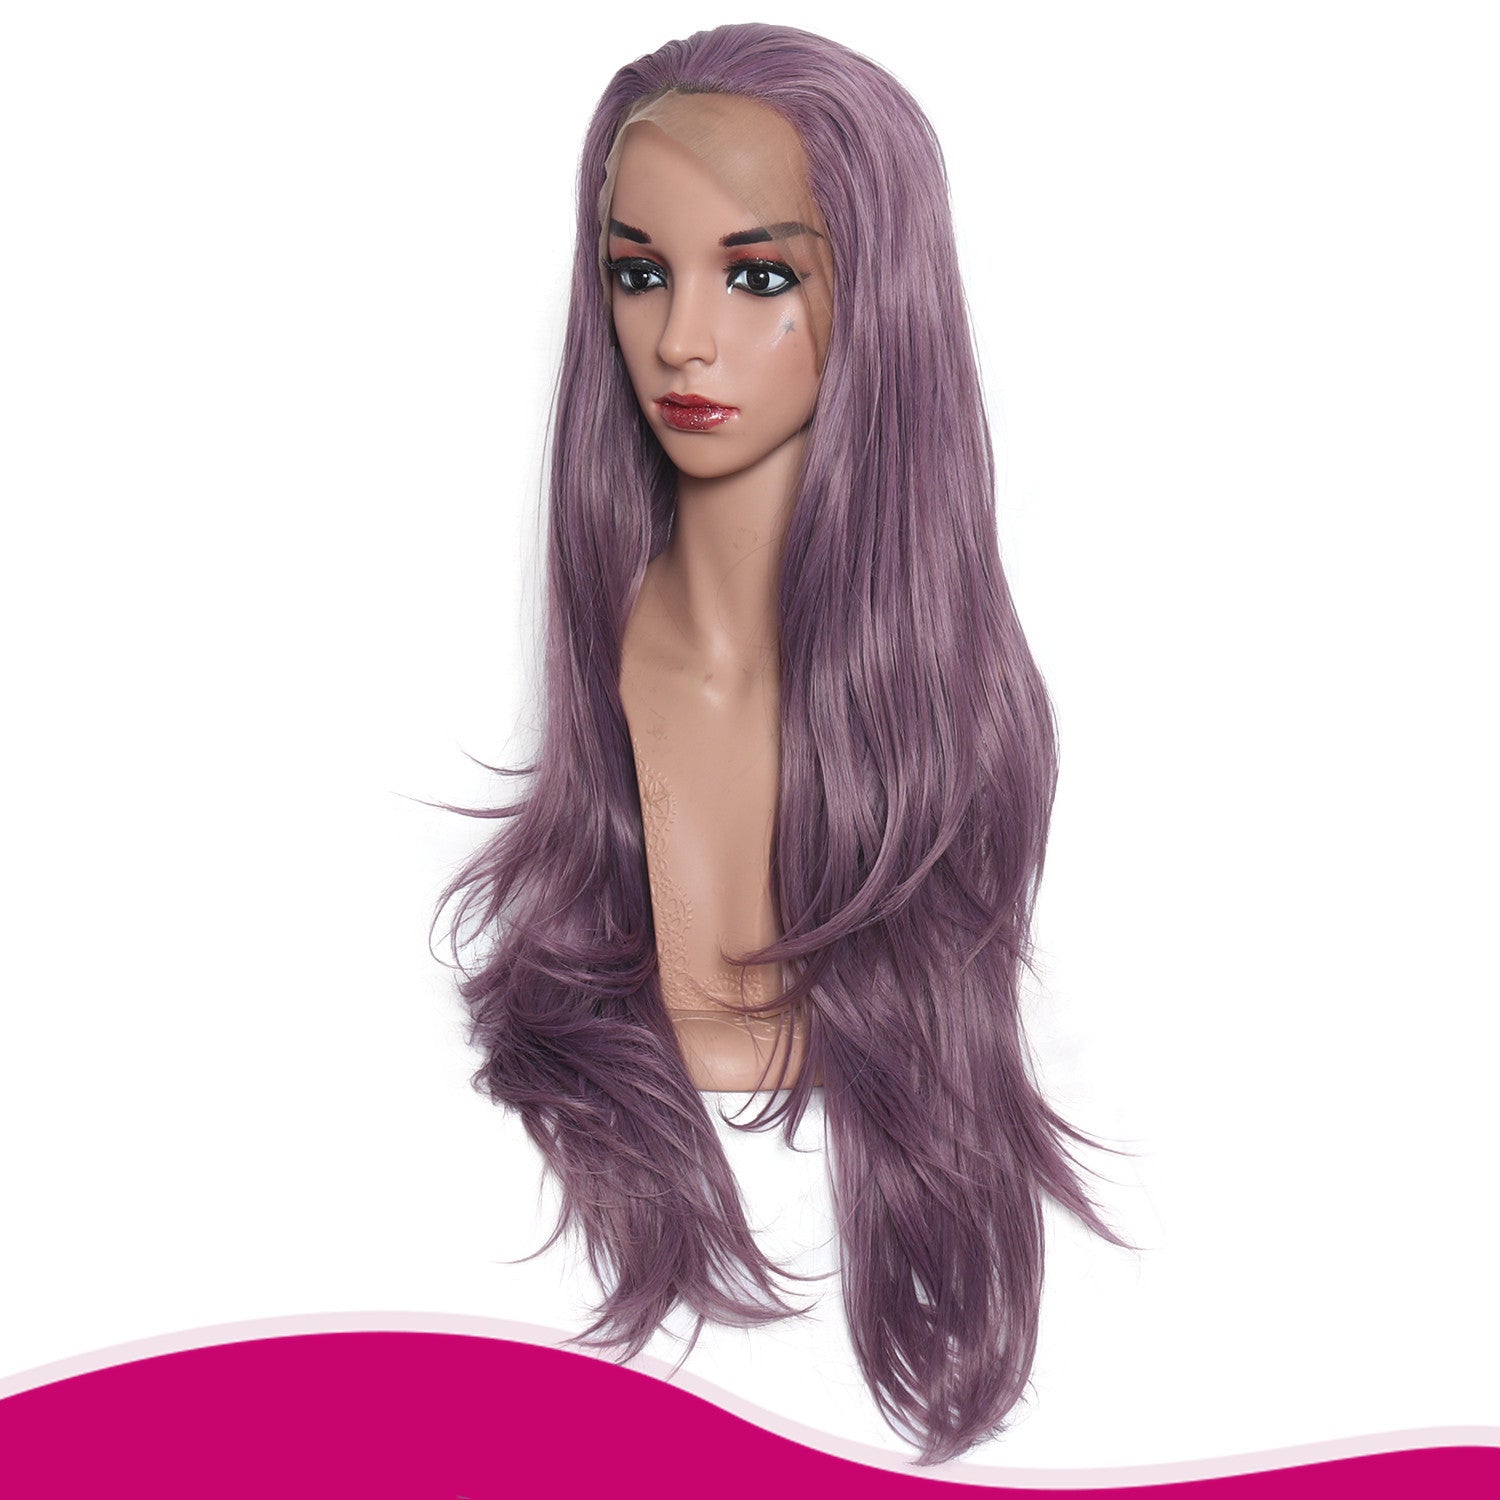 Purple curly hair